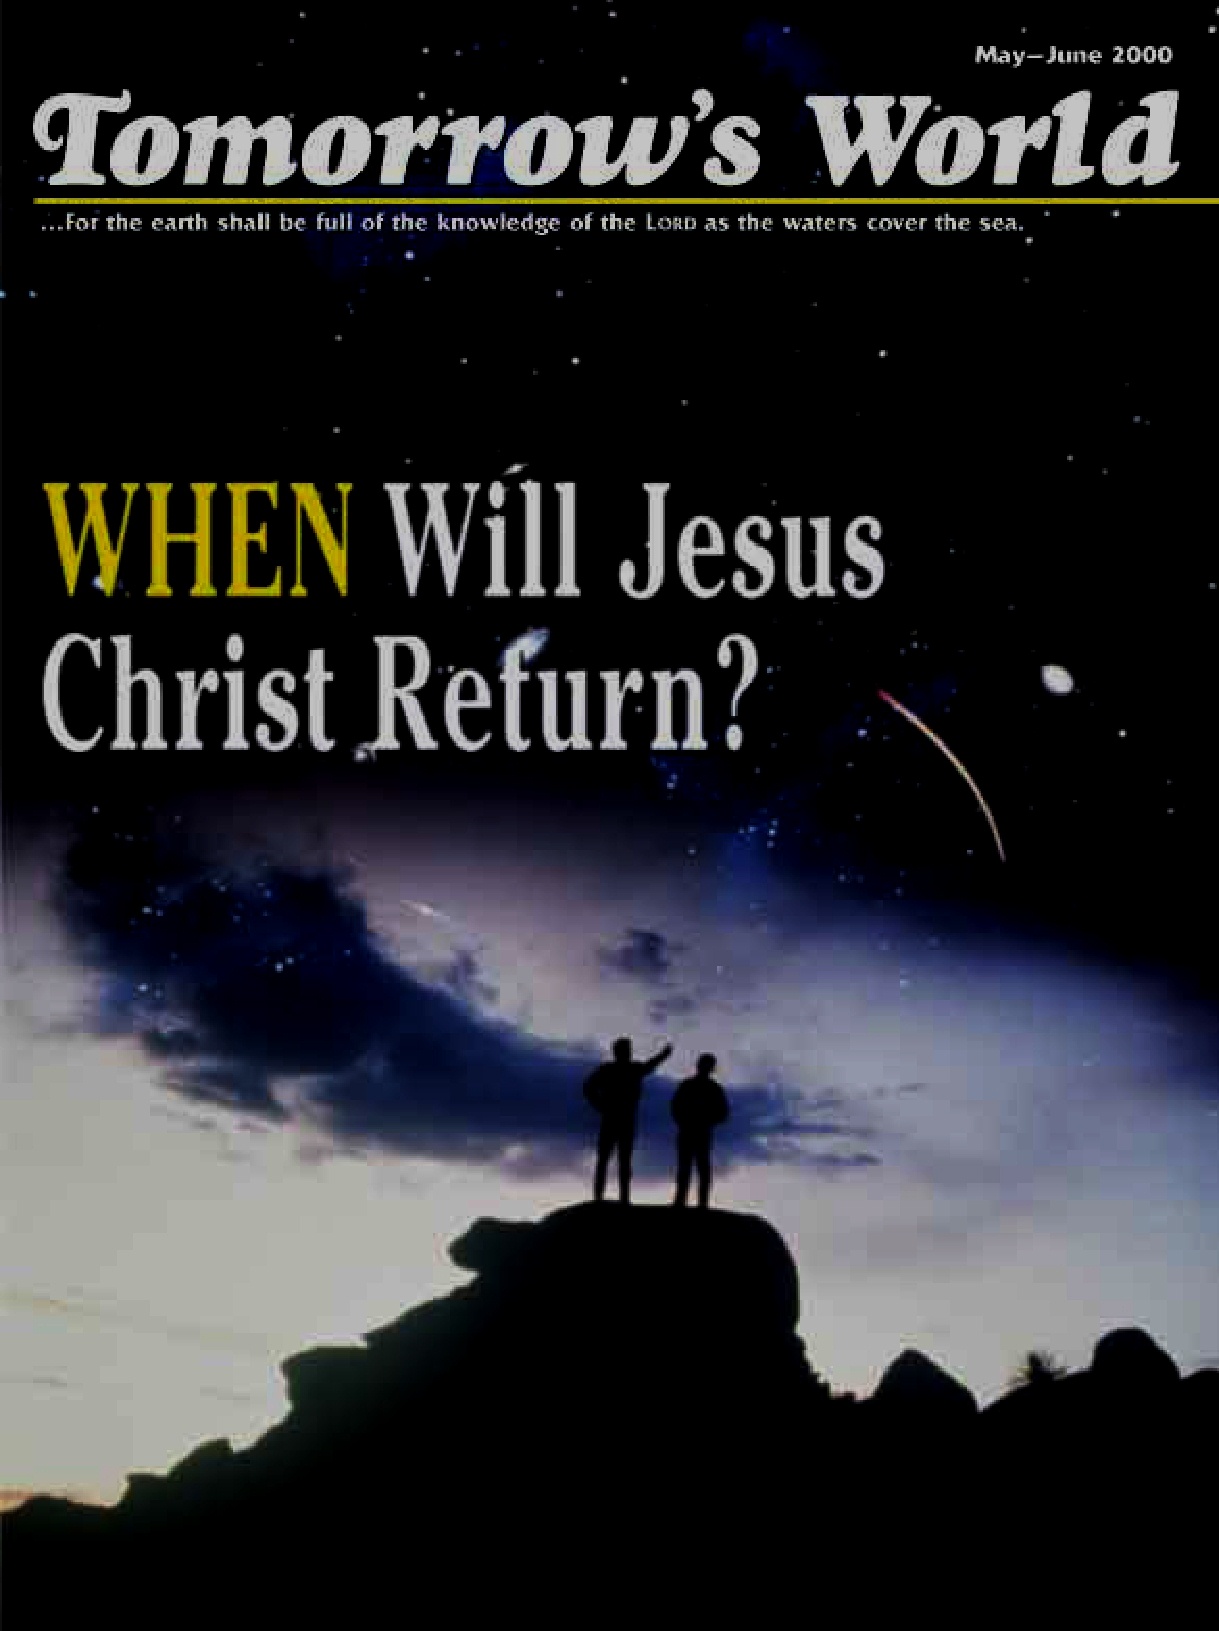 When Will Jesus Christ Return? | Tomorrow's World